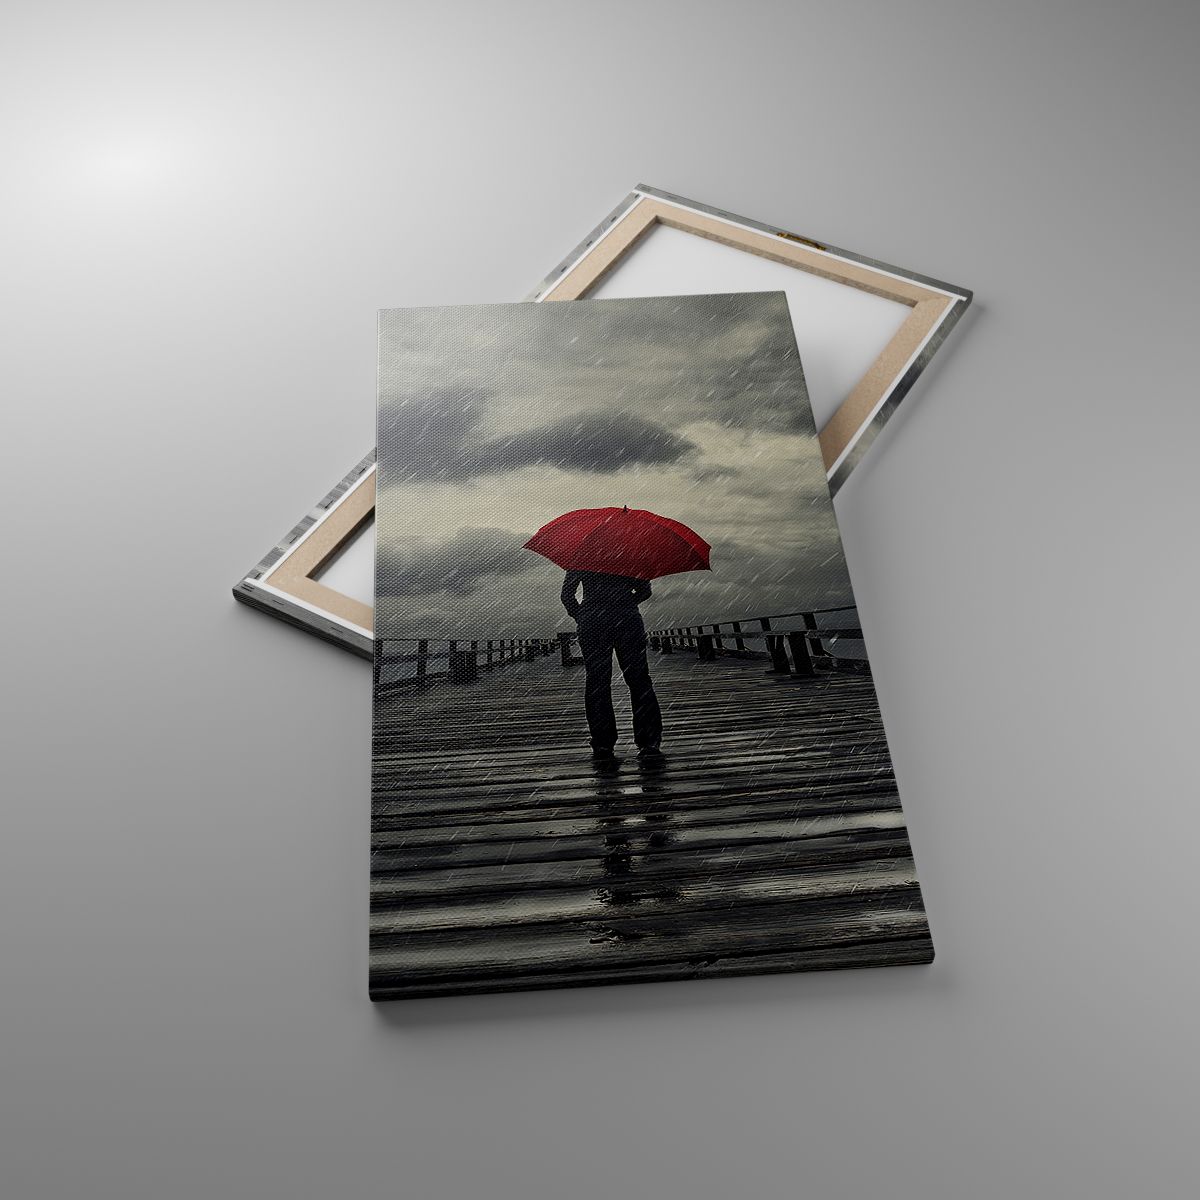 Leinwandbild Holzsteg, Leinwandbild Meer, Leinwandbild Im Regen Spazieren Gehen, Leinwandbild Mann, Leinwandbild Abstraktion